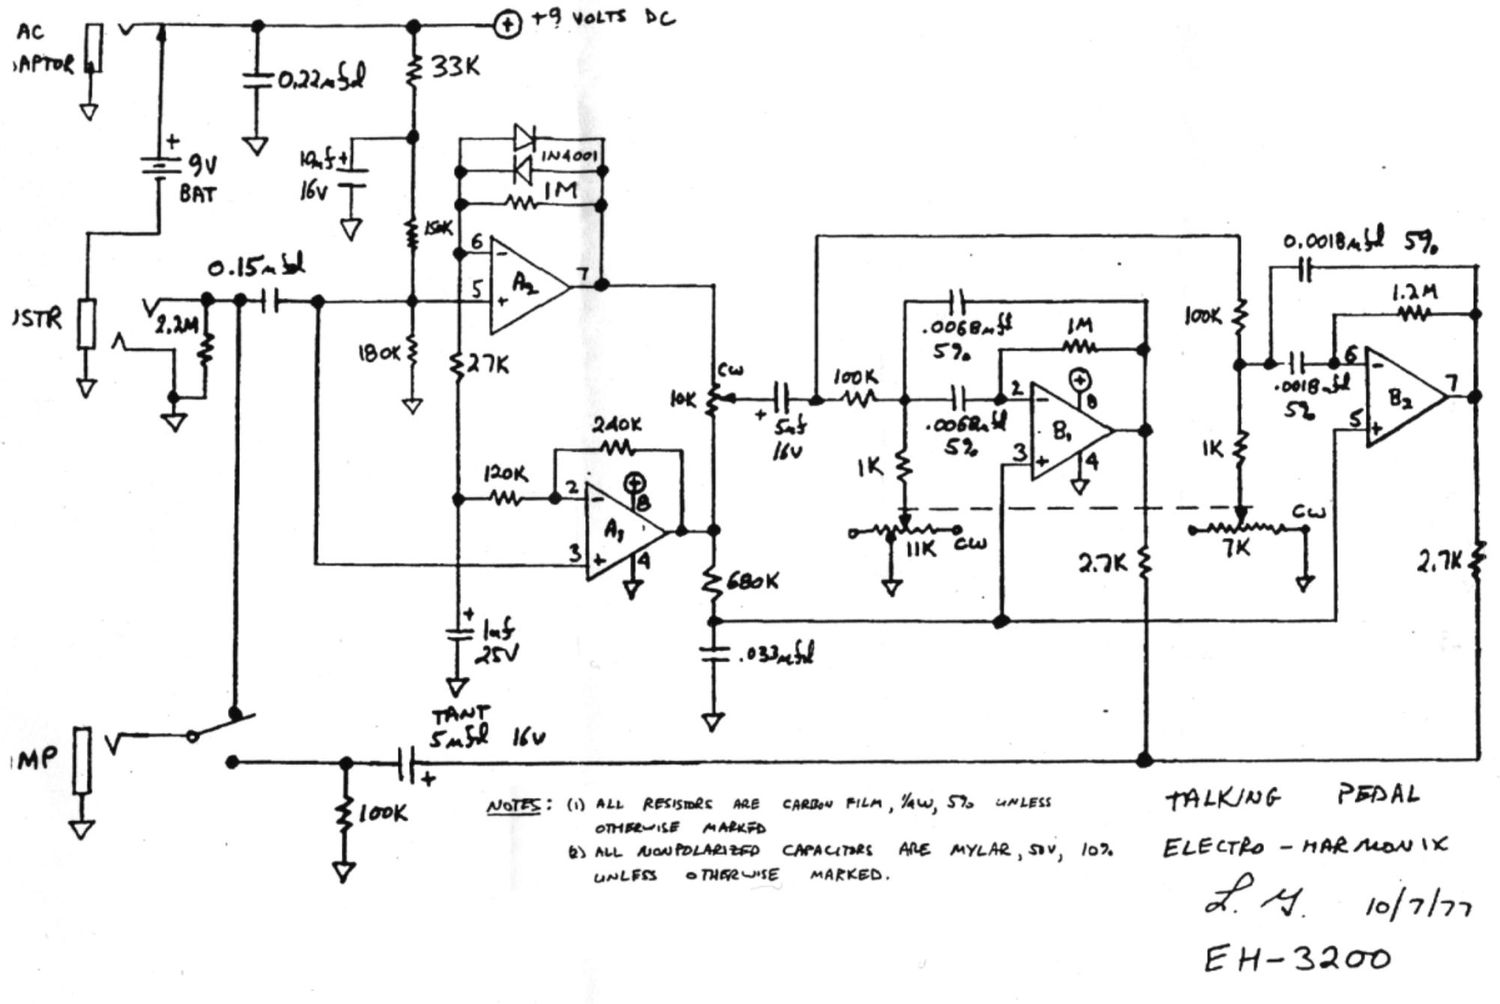 electro harmonix talking pedal schematic